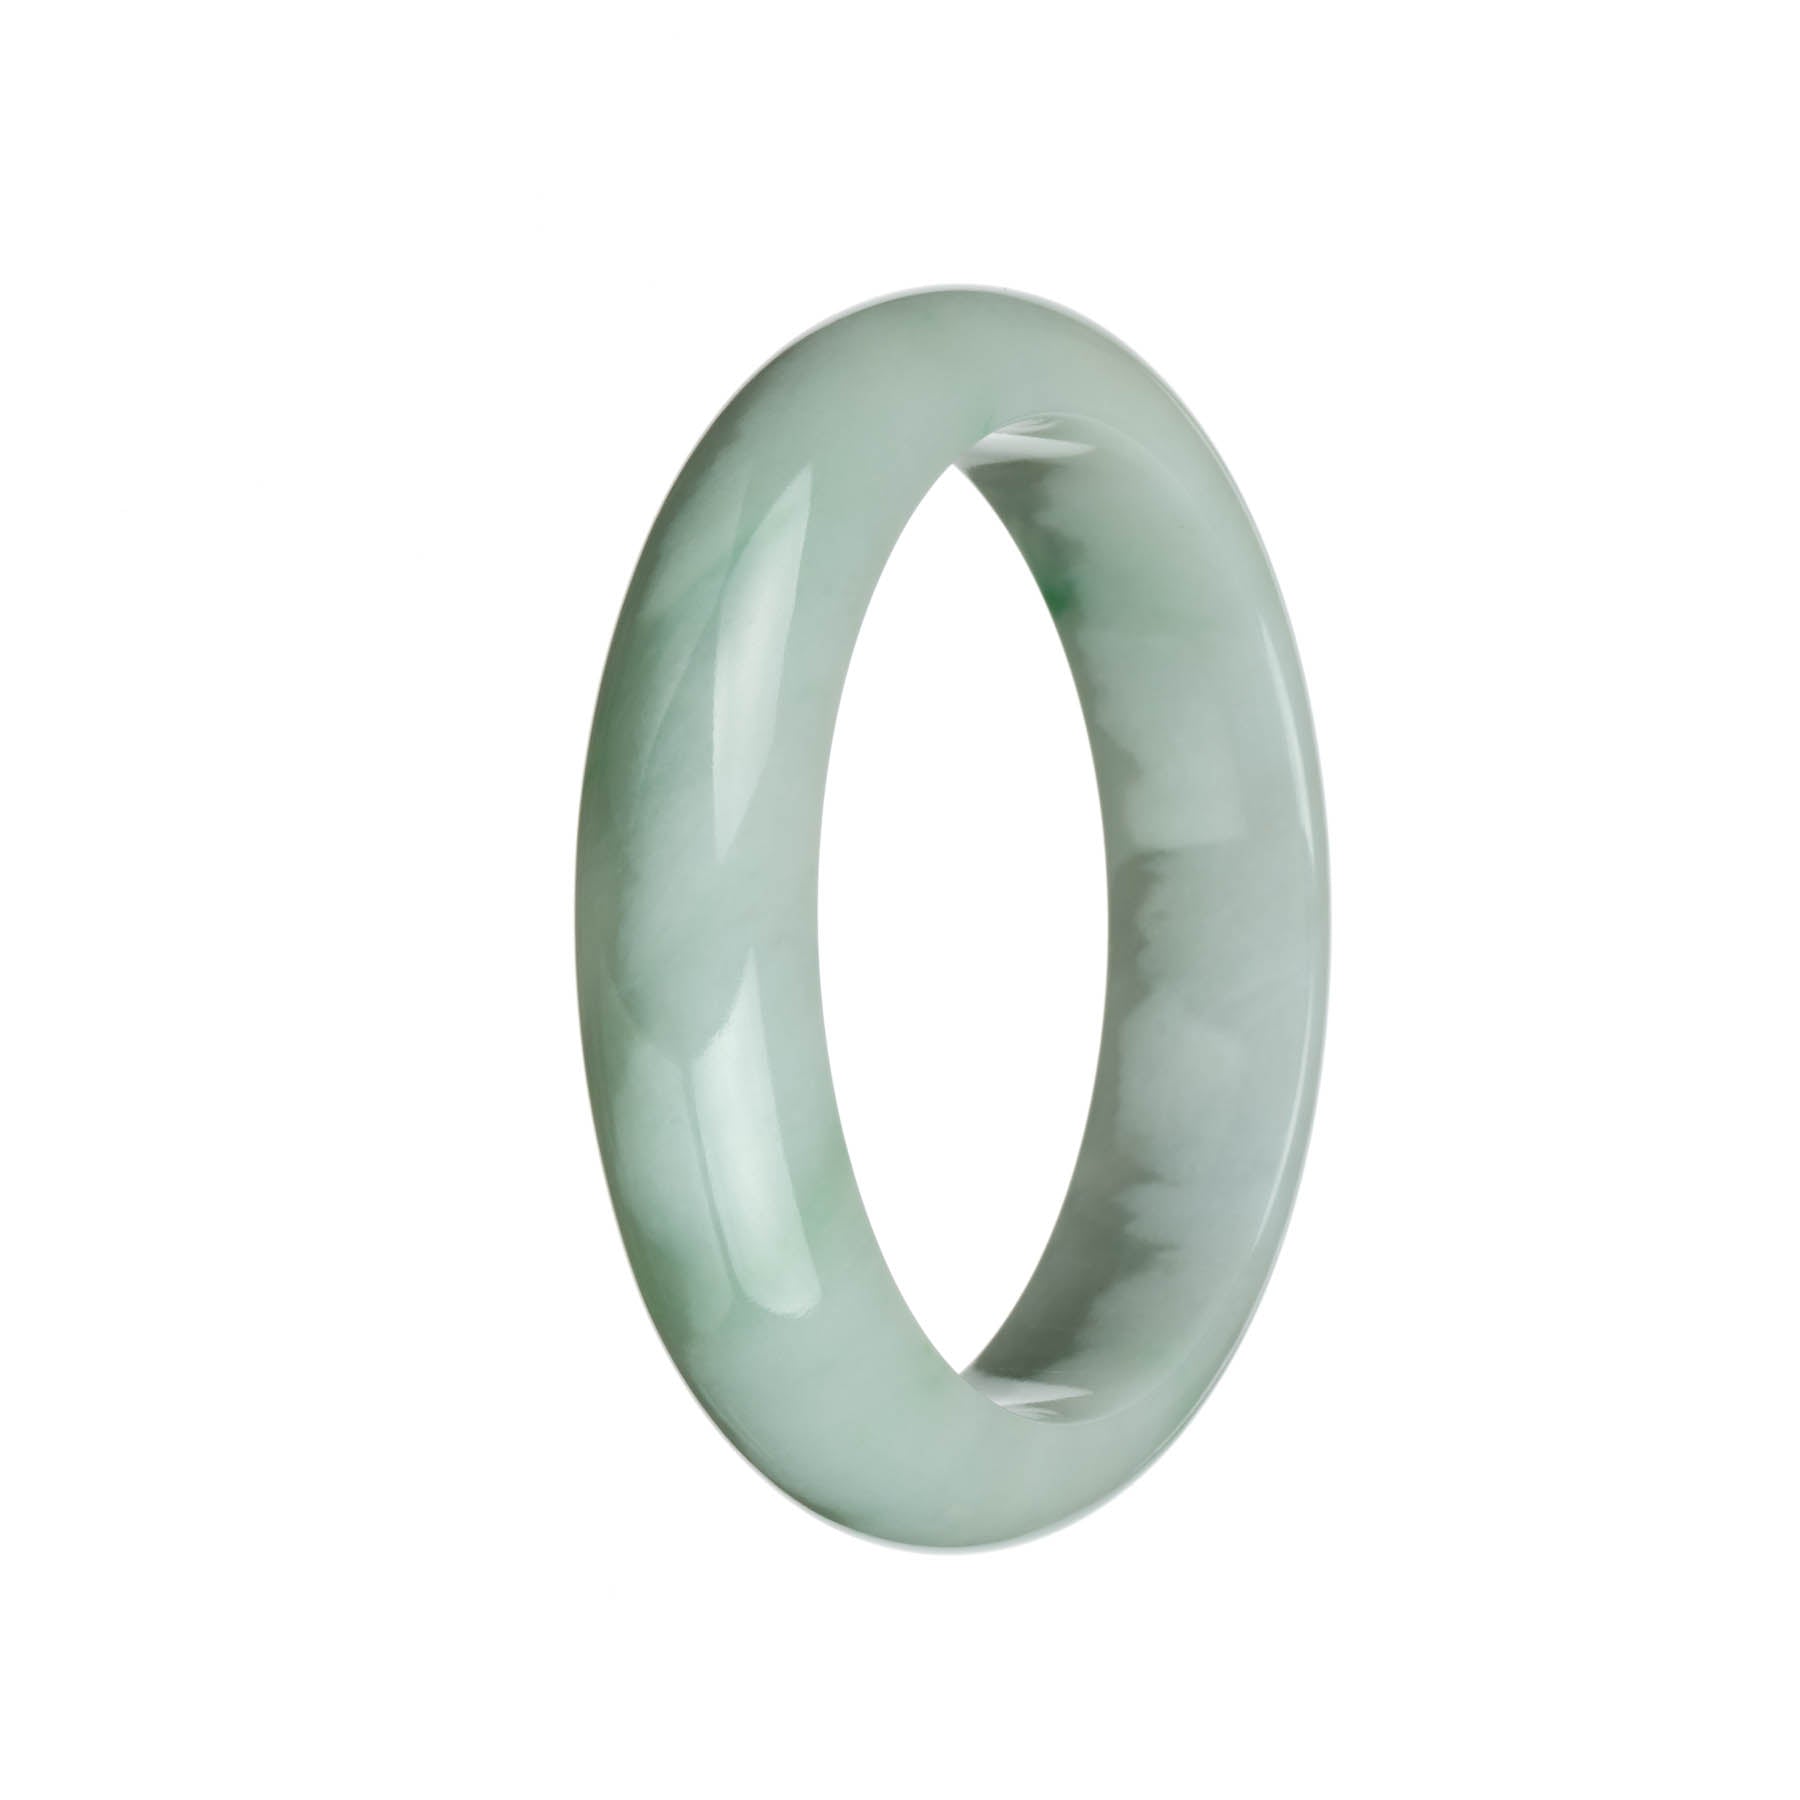 Burmese Genuine Jade Bracelet Round Beads 12 mm Carved Every Grain, White  Green